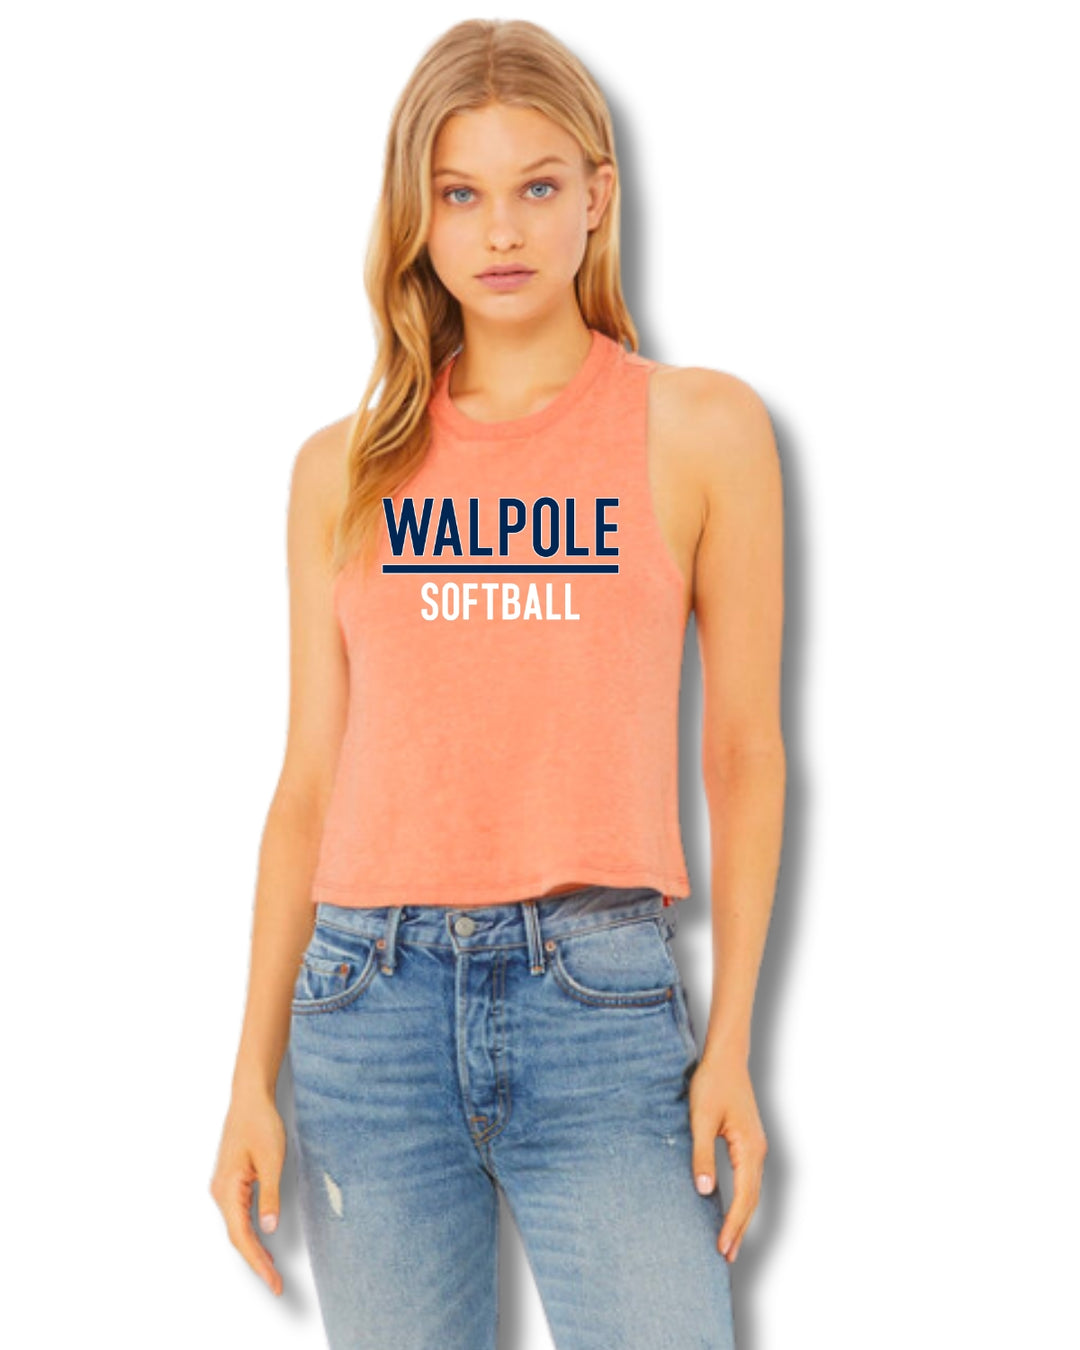 Walpole Softball Bella + Canvas Ladies' Racerback Cropped Tank (6682)